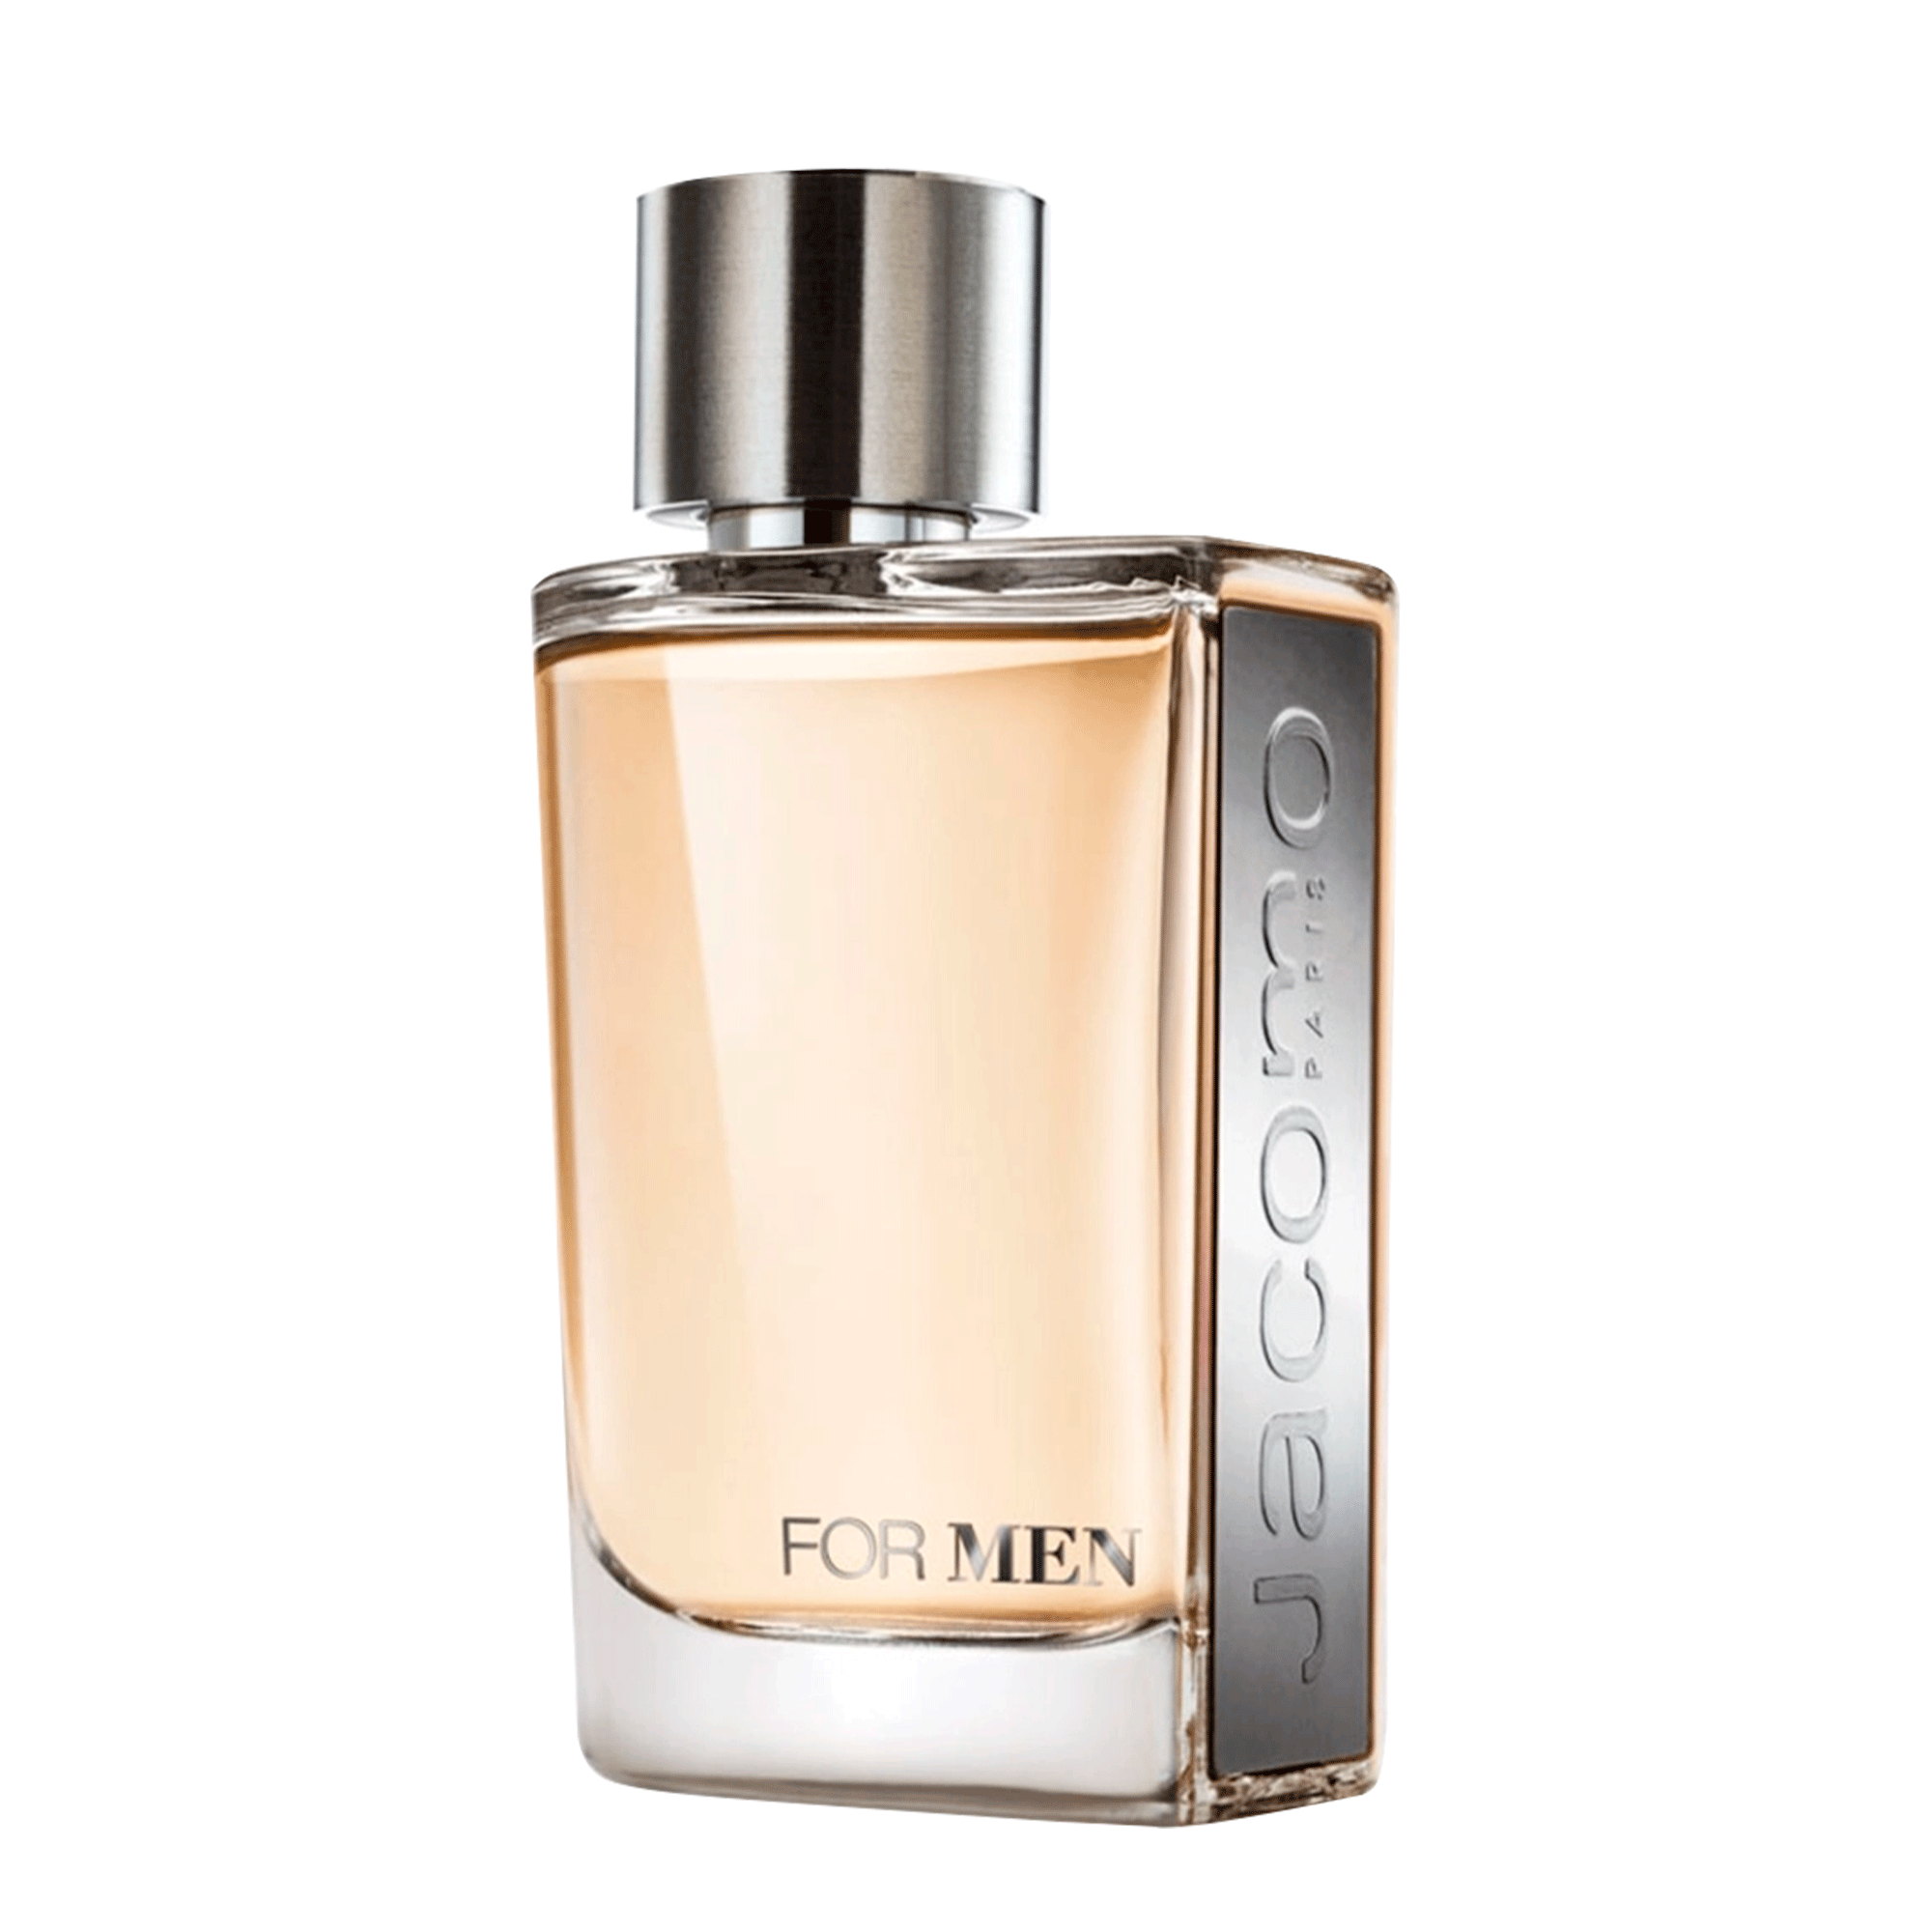 Jacomo For Men Eau de Toilette - Perfume Masculino 50ml - Pague Menos